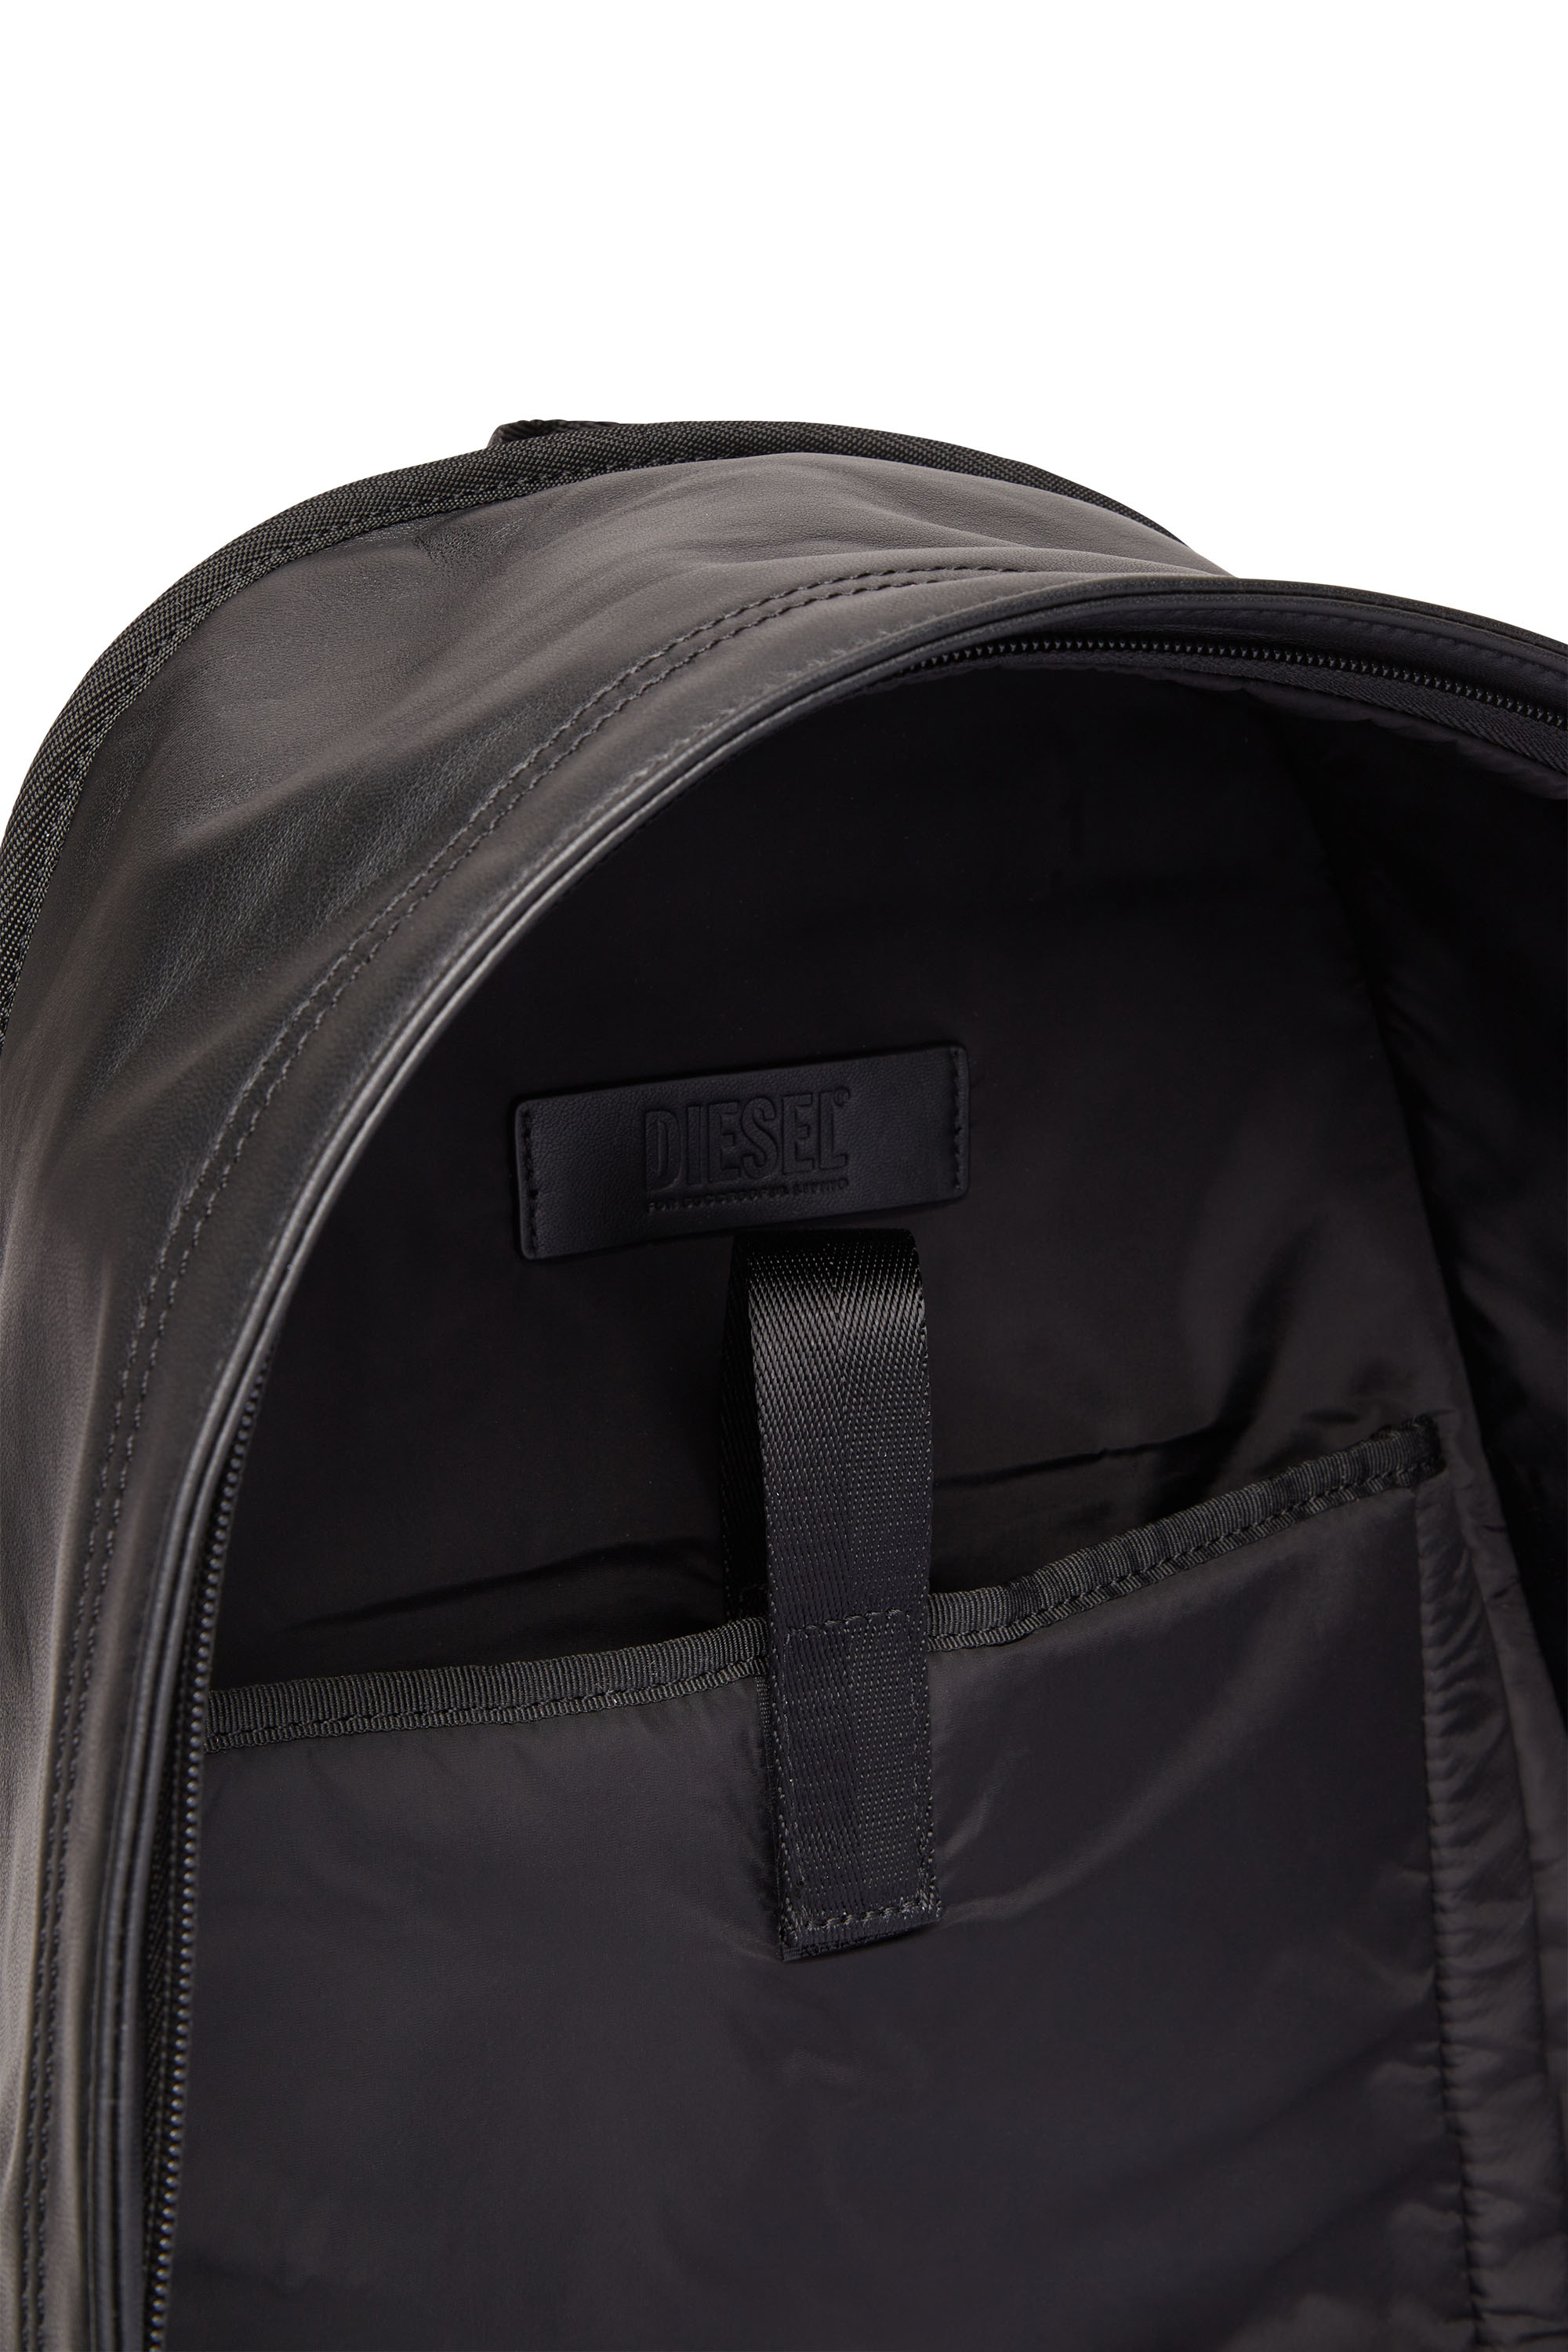 MMS Design Studio The Journey Crossbody Shoulder Bag for Women, Distressed  Vegan Leather - Black: Handbags